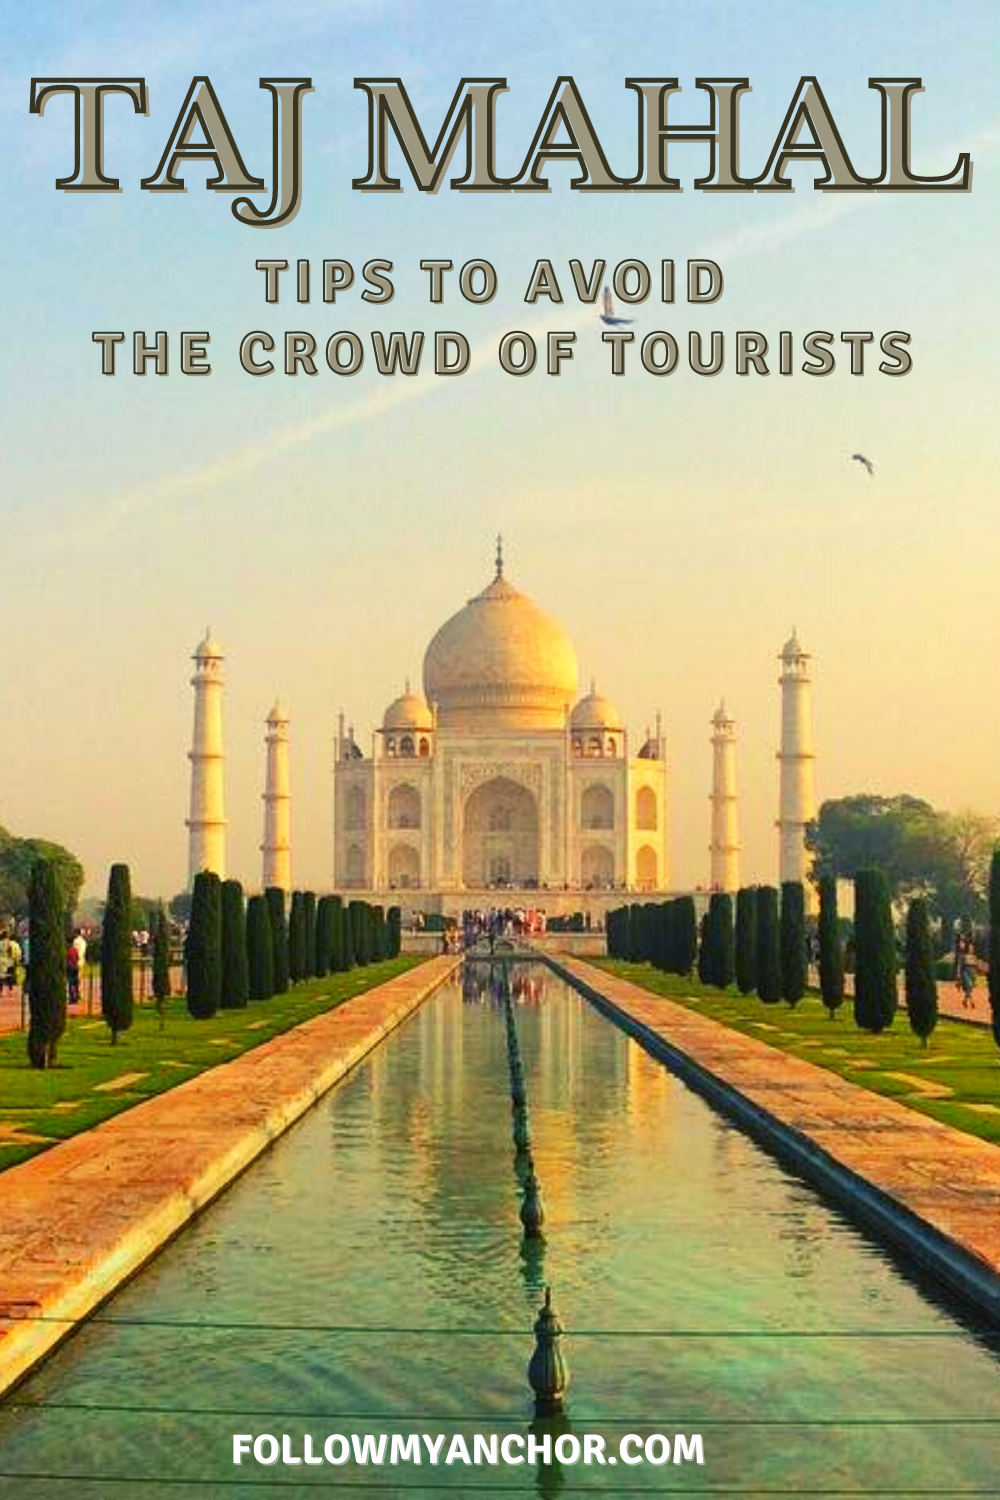 TAJ MAHAL: TIPS TO AVOID THE CROWD OF TOURISTS